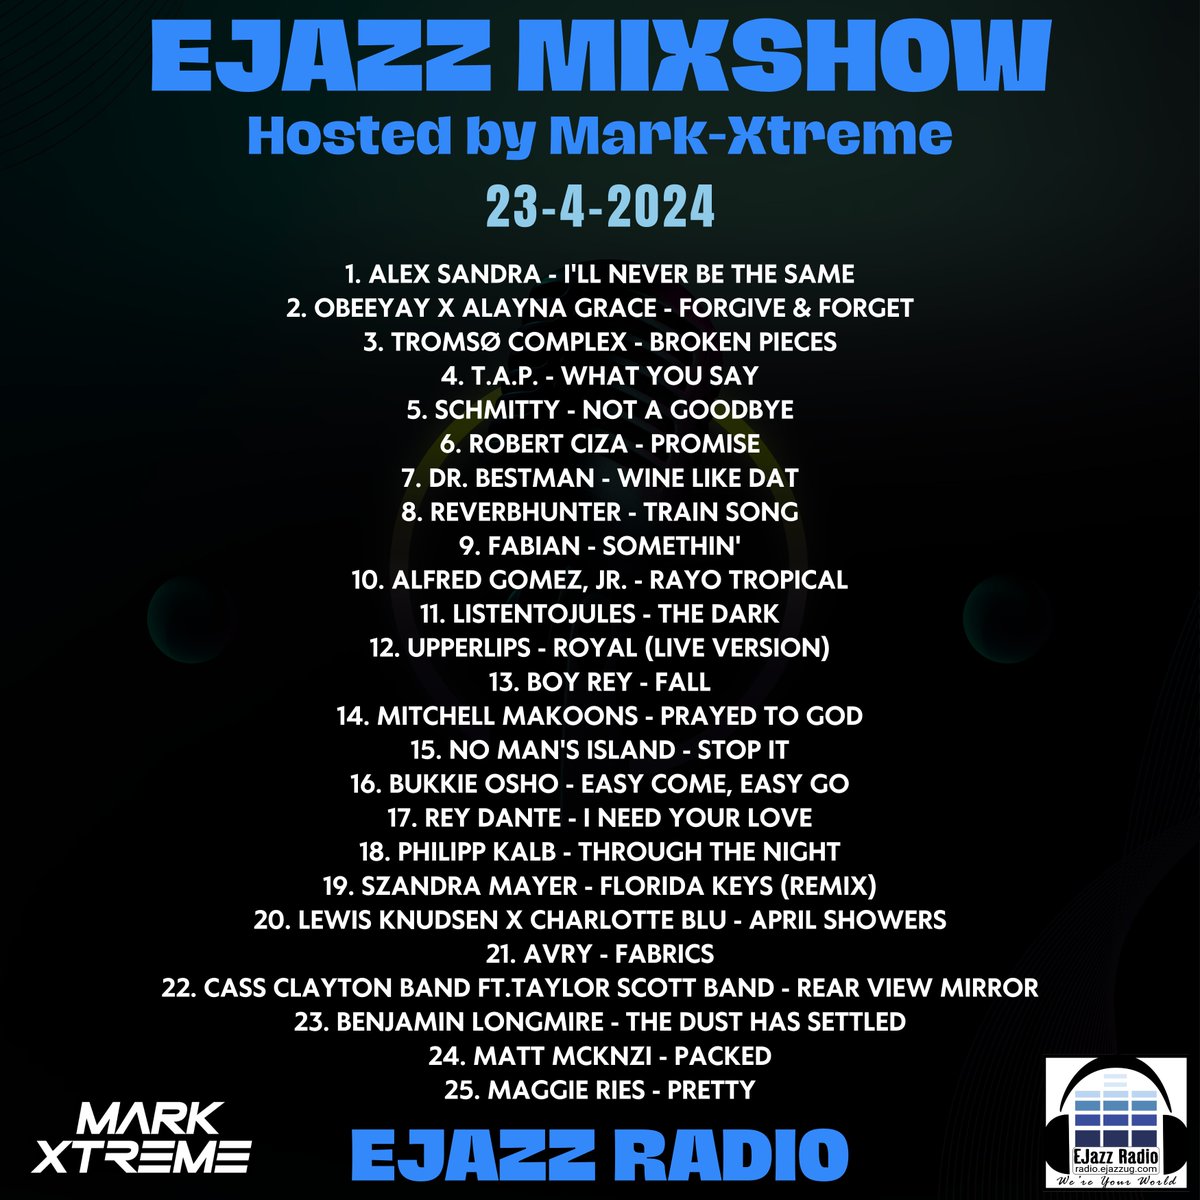 #EjazzMixShow Mon-Friday 1-2pm EAT on Ejazz Radio hosted by Dj Mark-Xtreme

23-4-2024 Playlist

#MixShow #Newmusic #goodmusic #Radio #Indieartists #indiemusic